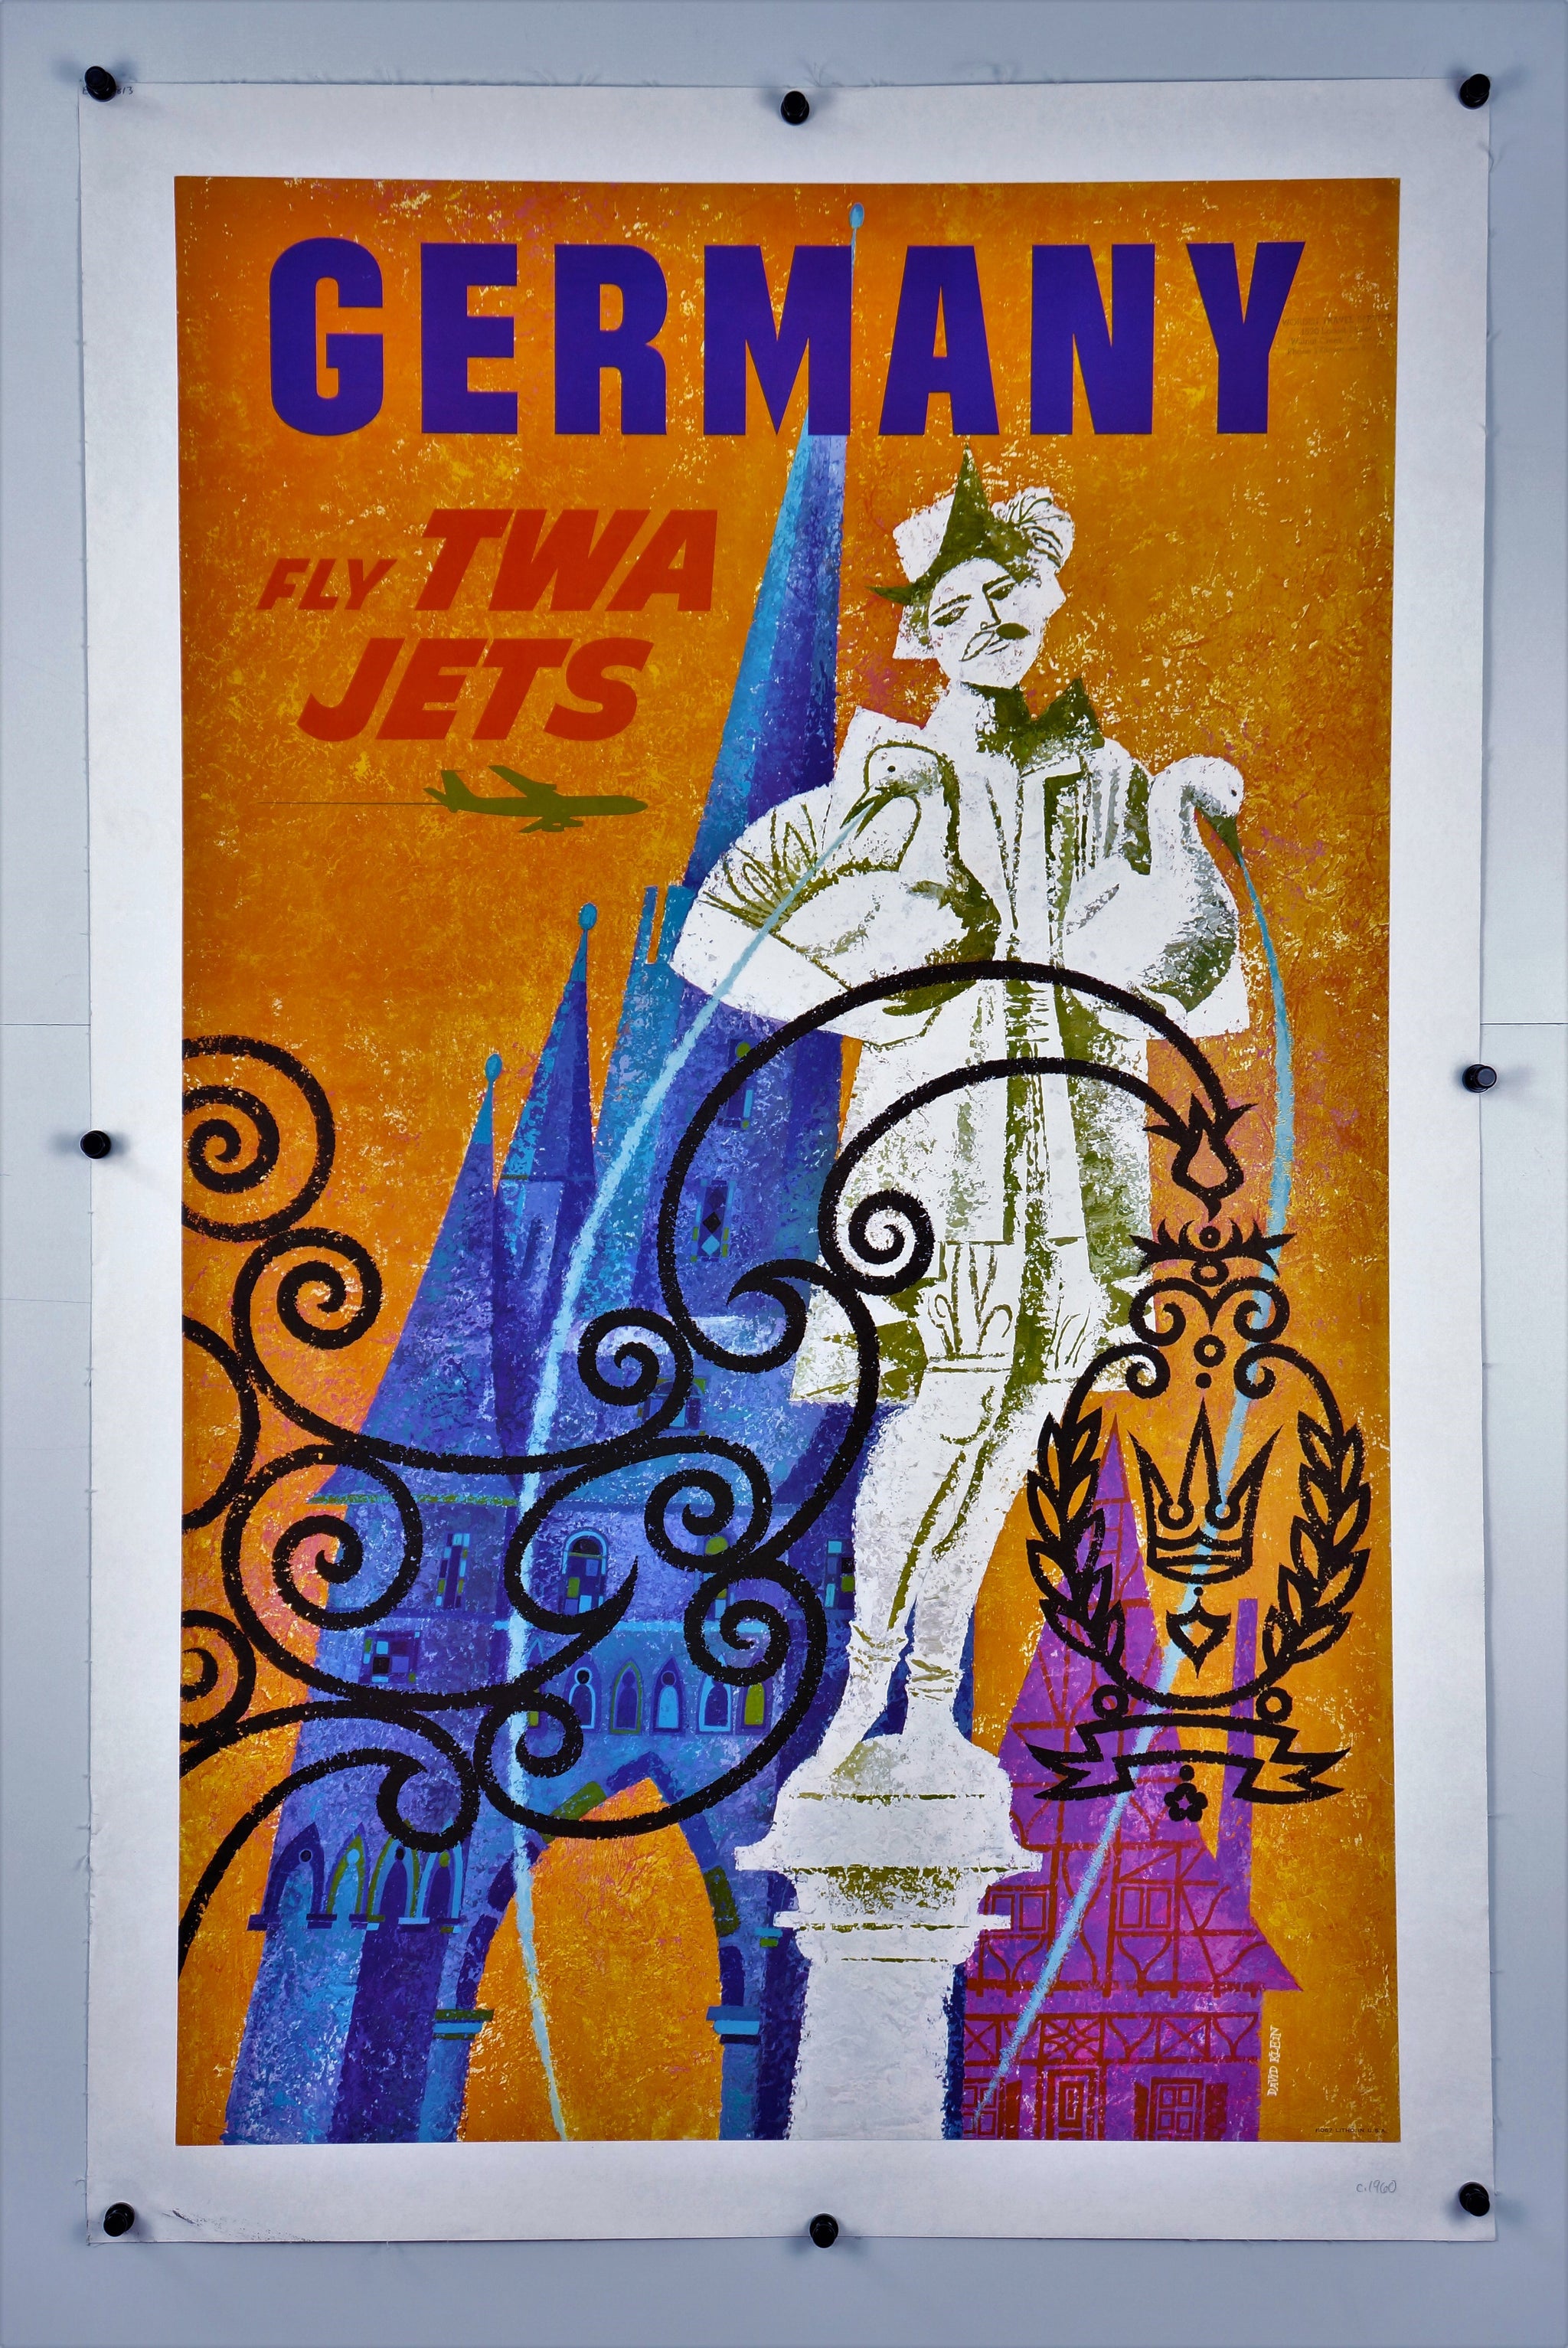 Fly TWA New York / David. - digital file from original item